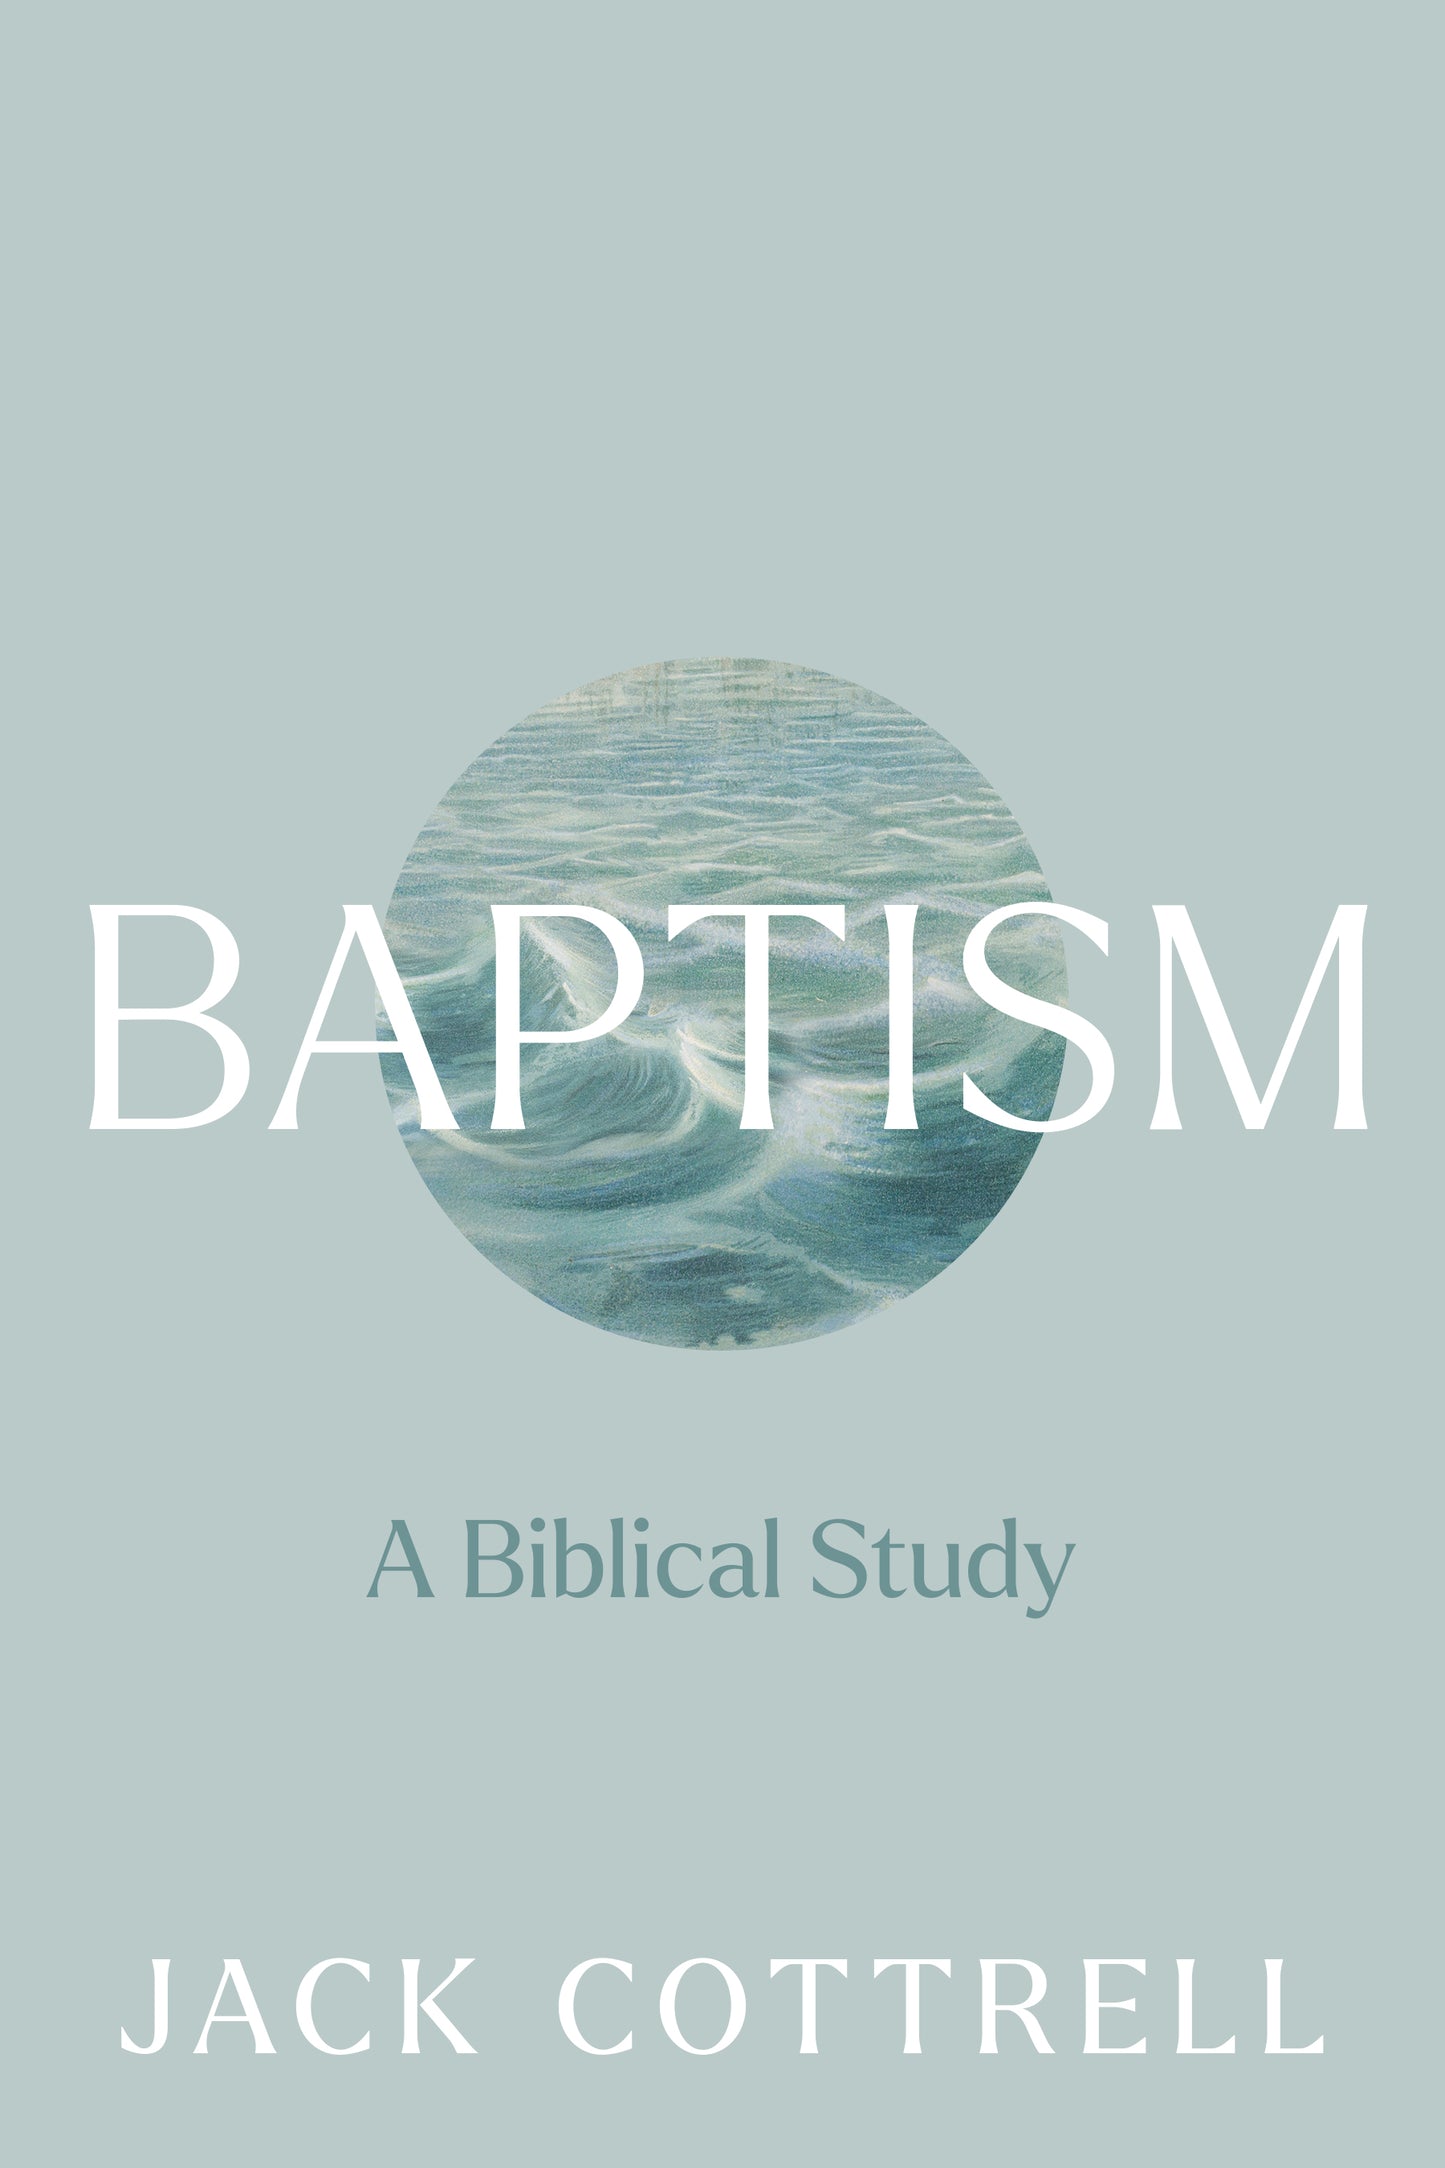 Baptism: A Biblical Study